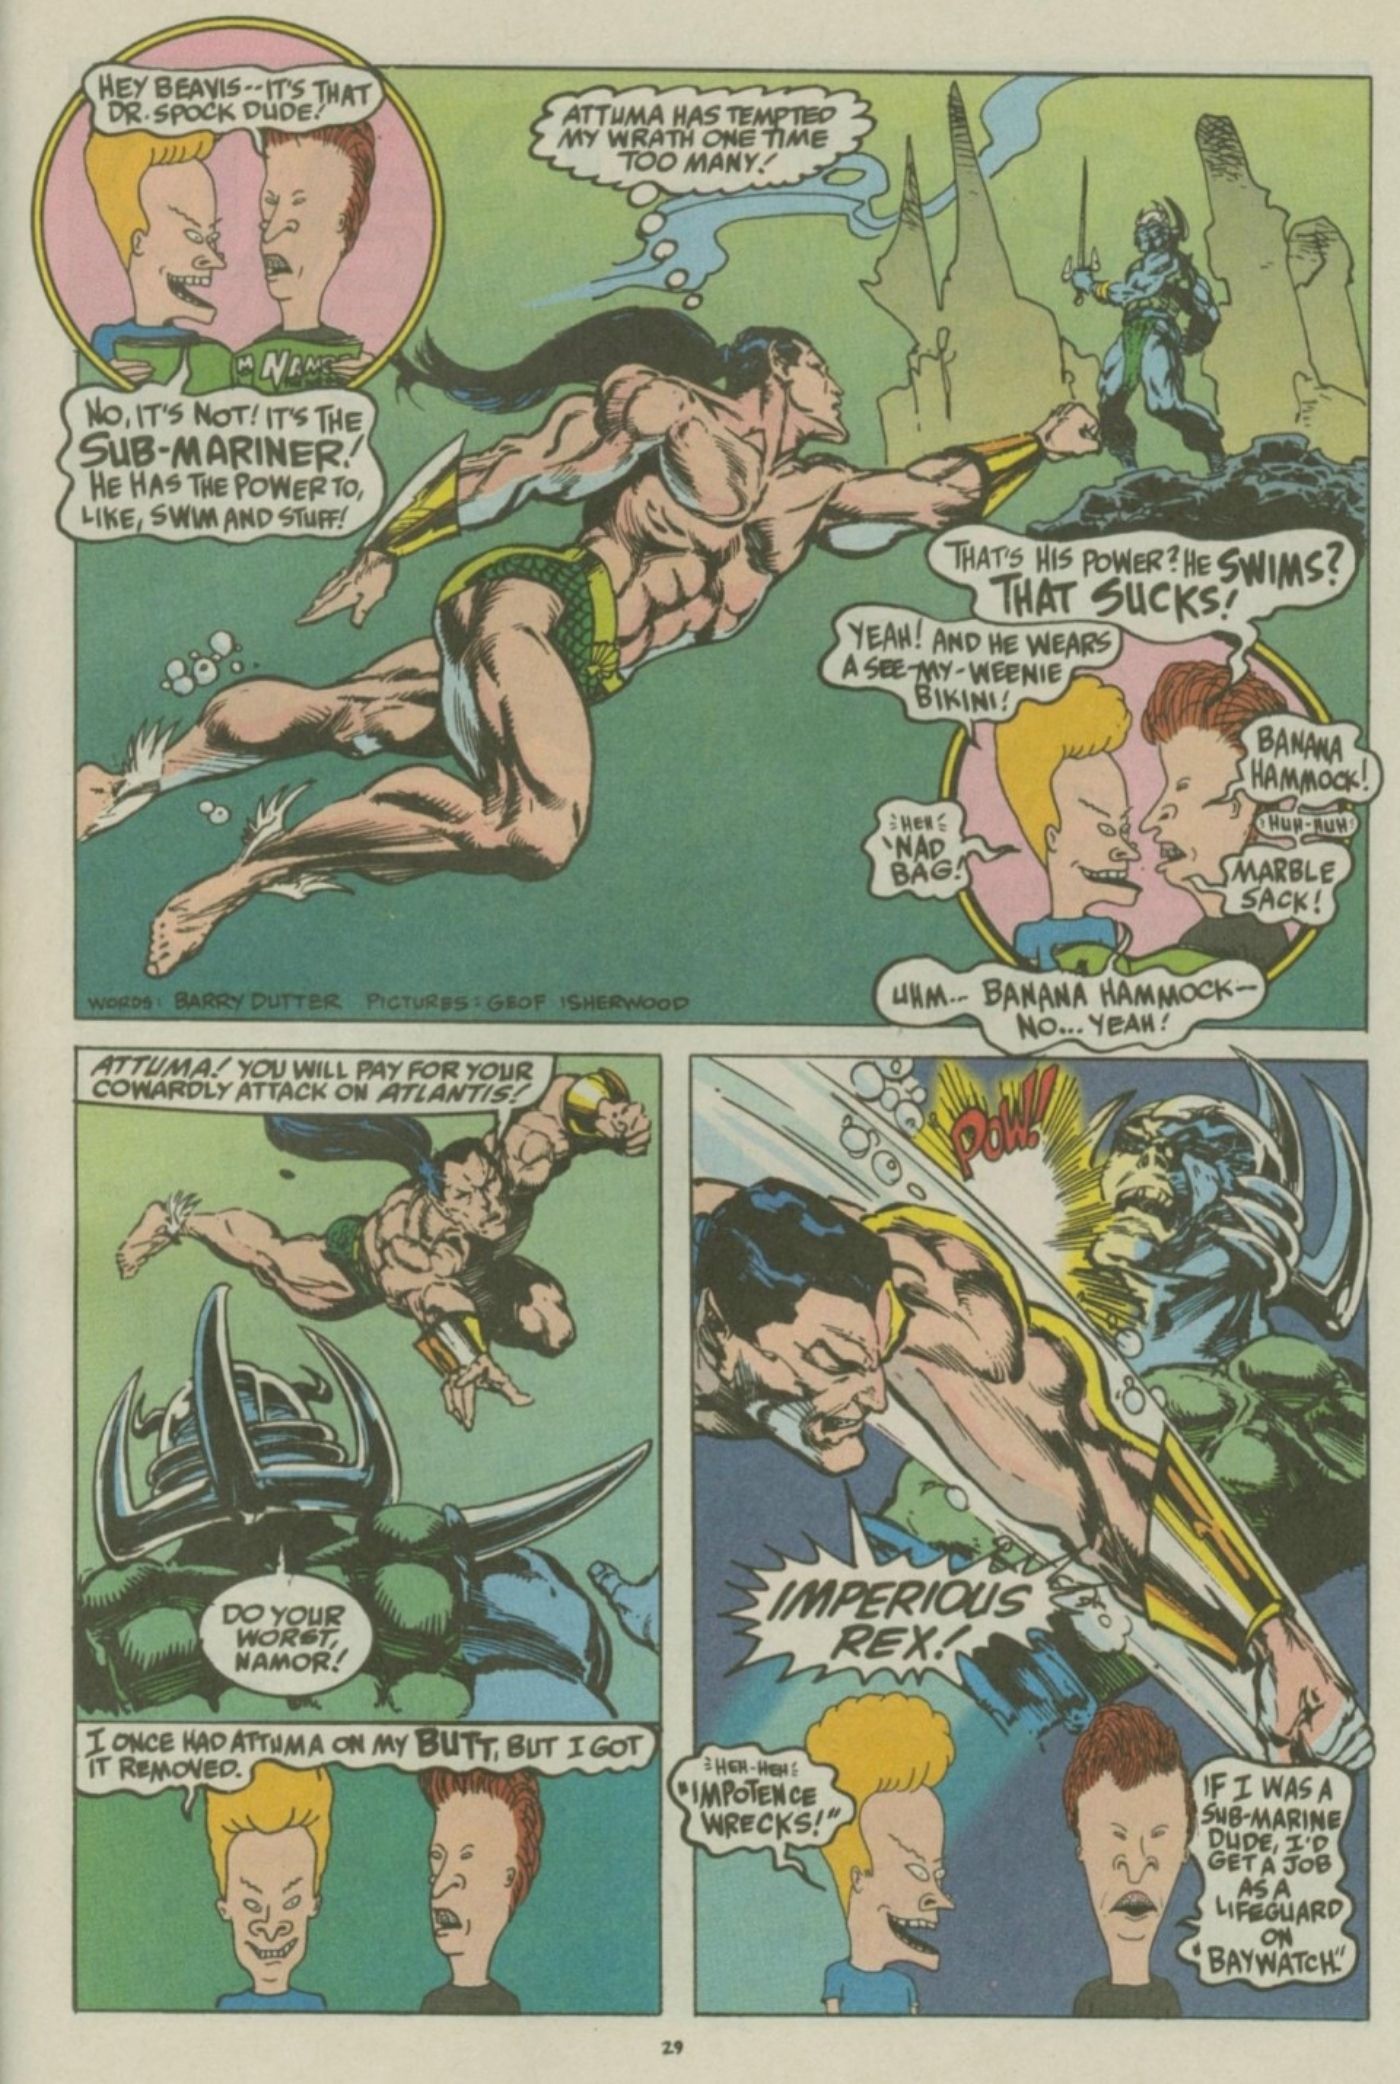 Beavis and Butt-Head reading a Namor comic.